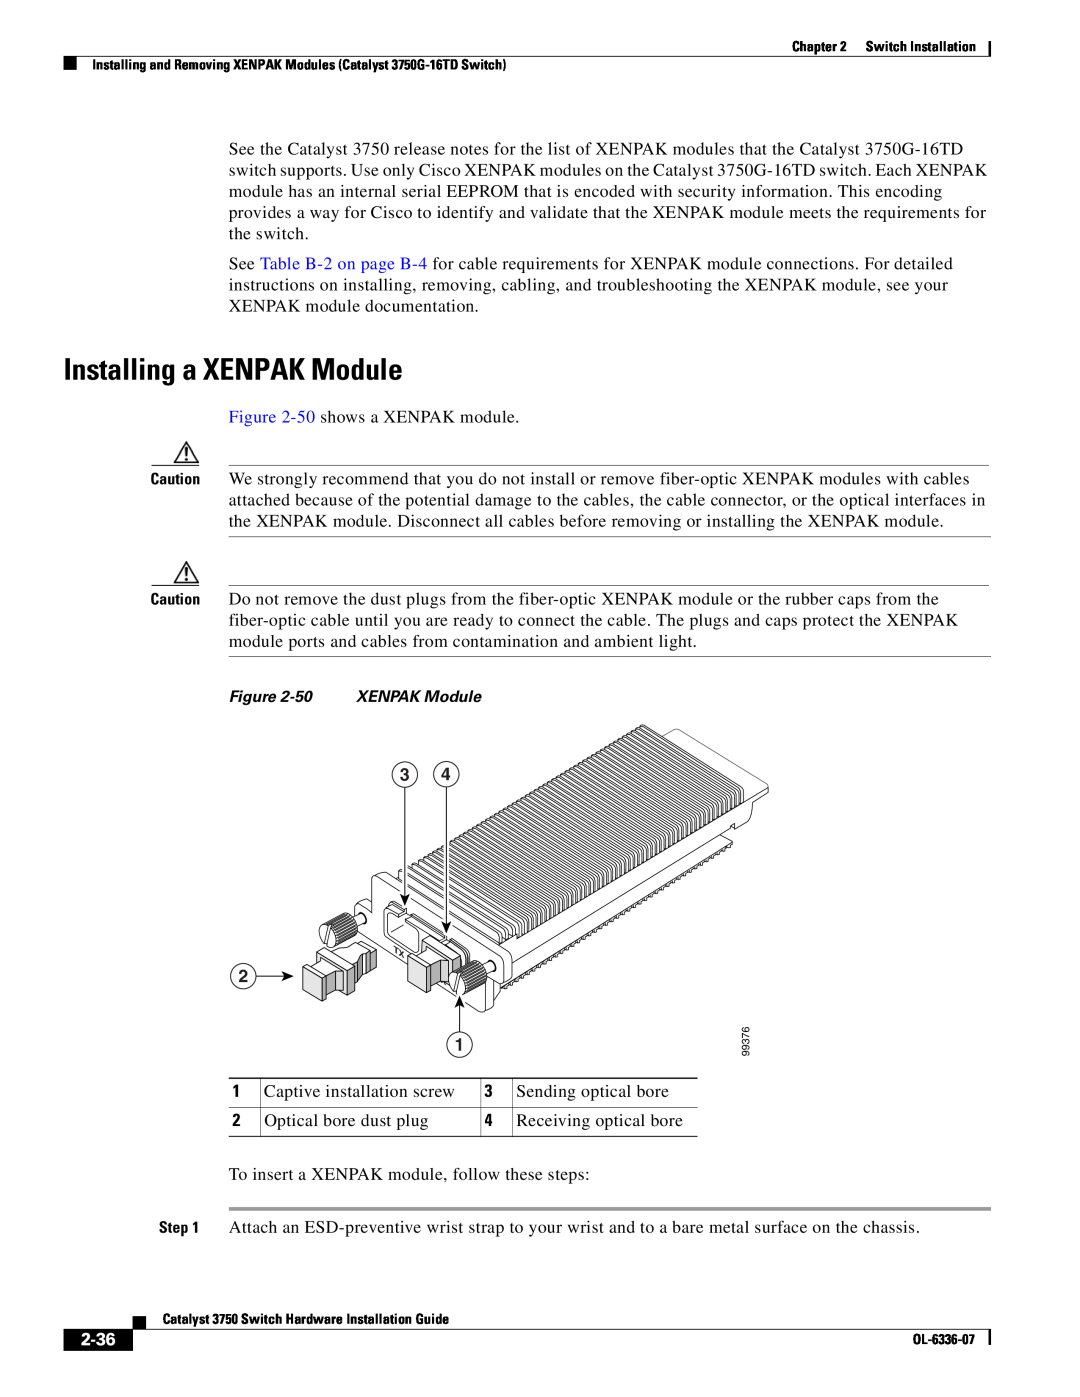 Cisco Systems WSC3750X24TS specifications Installing a XENPAK Module, 2-36 